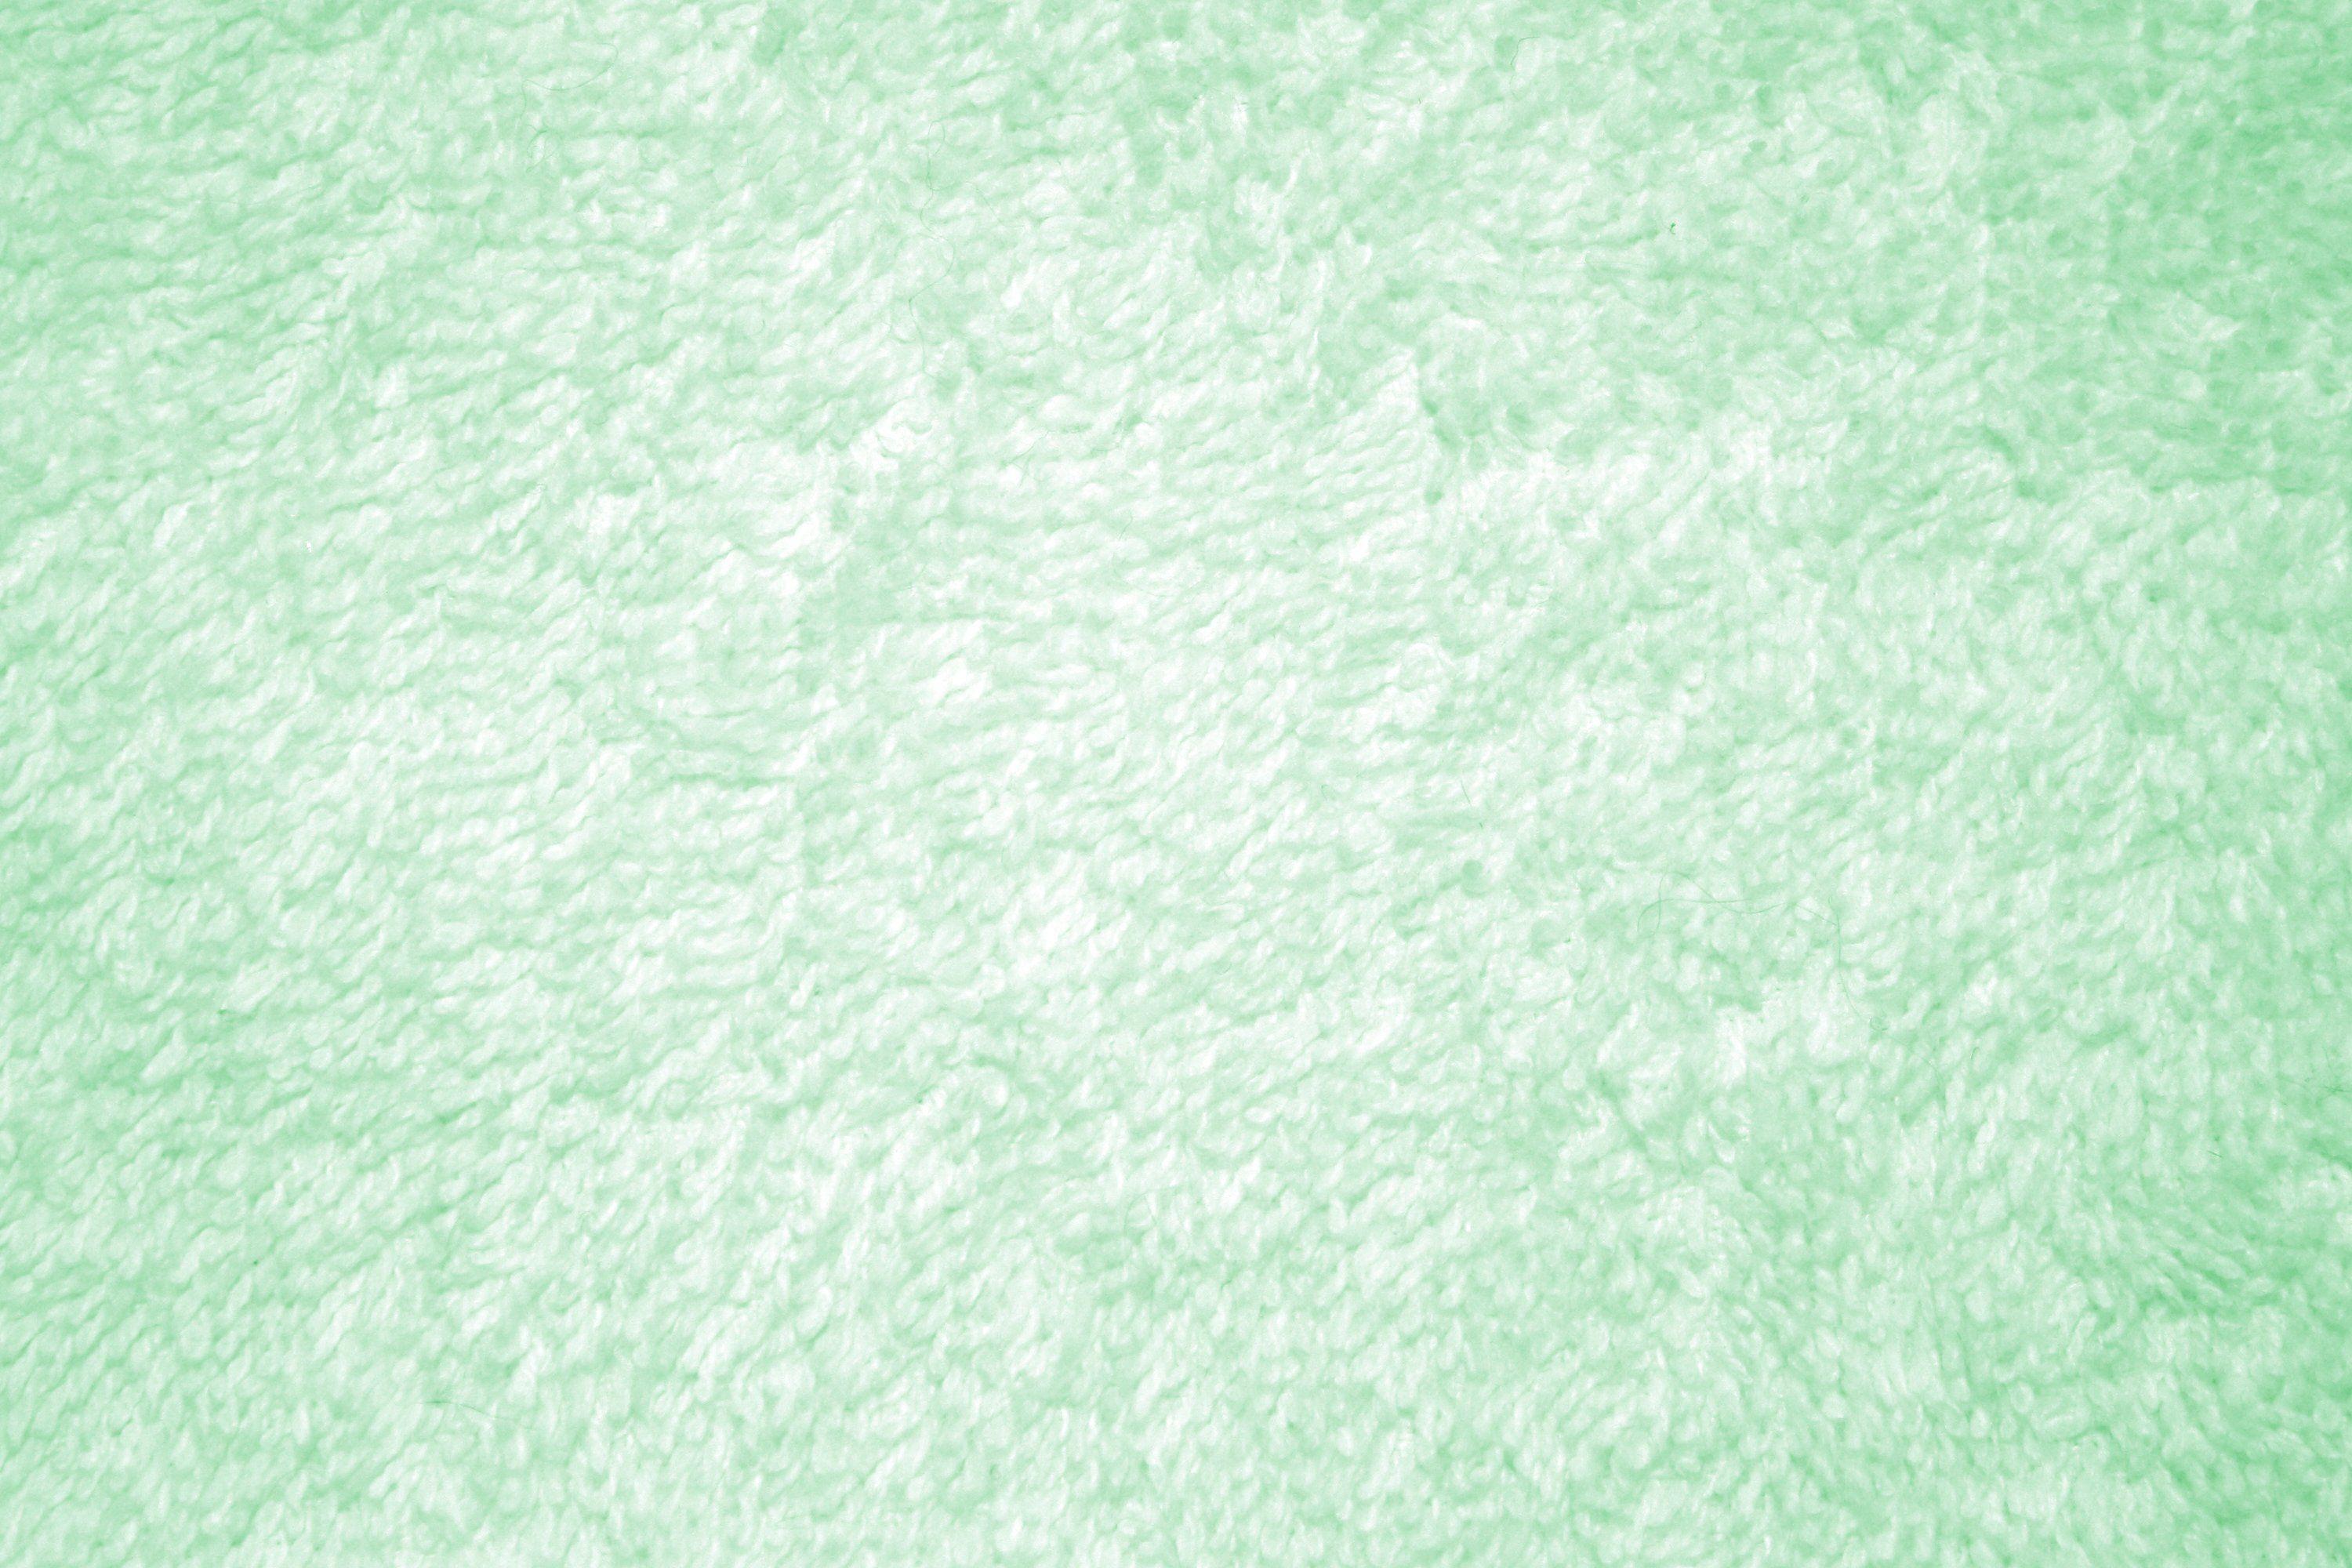 Abstract Wallpaper.com: Solid Mint Green Wallpaper High